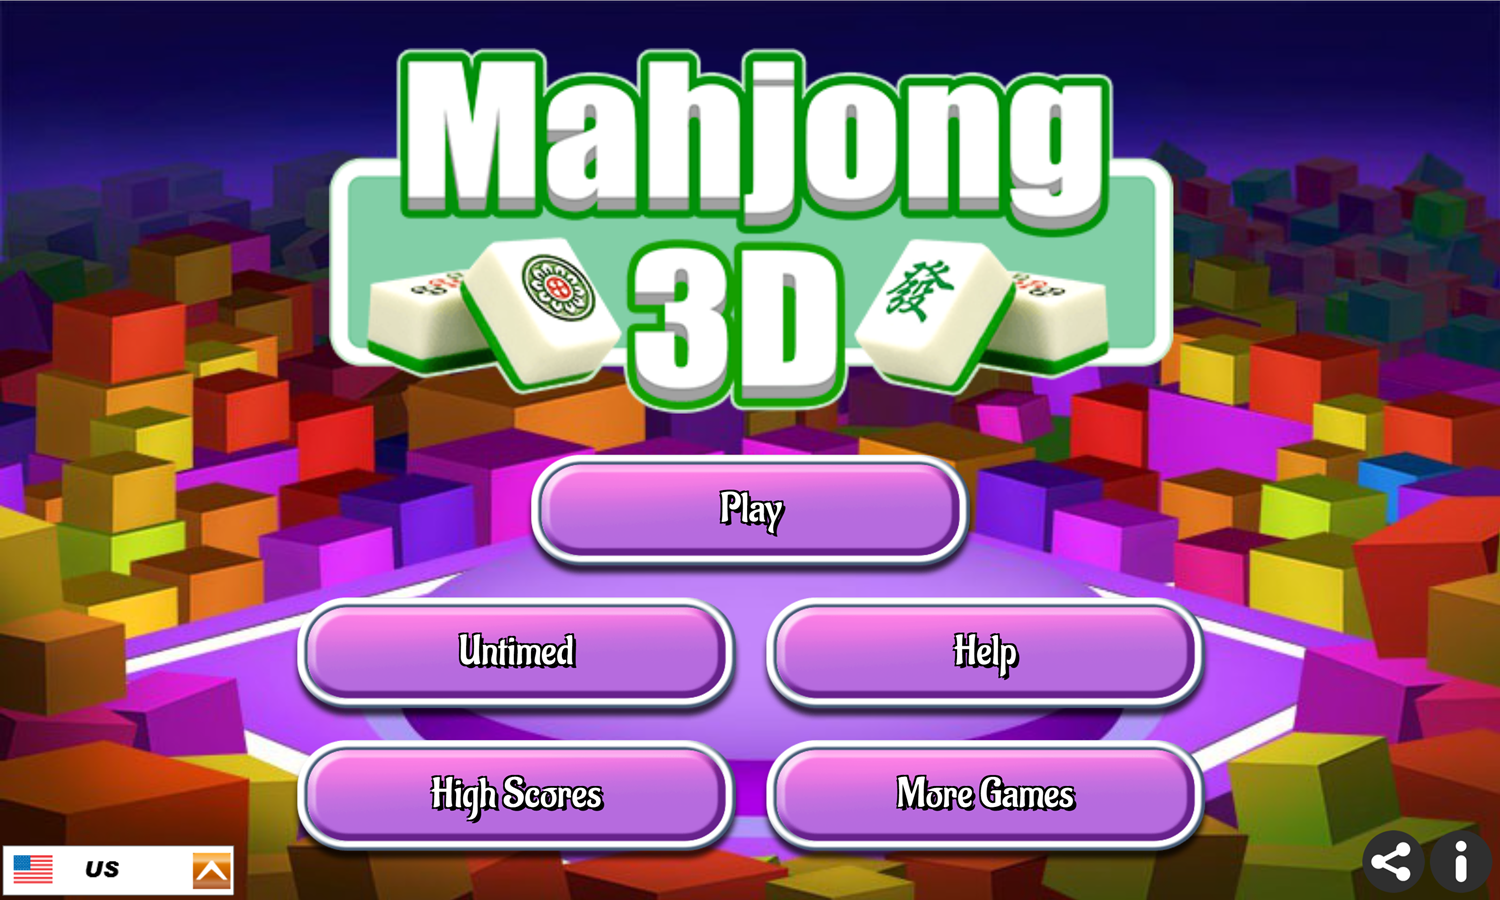 Mahjong 3D Game Welcome Screen Screenshot.